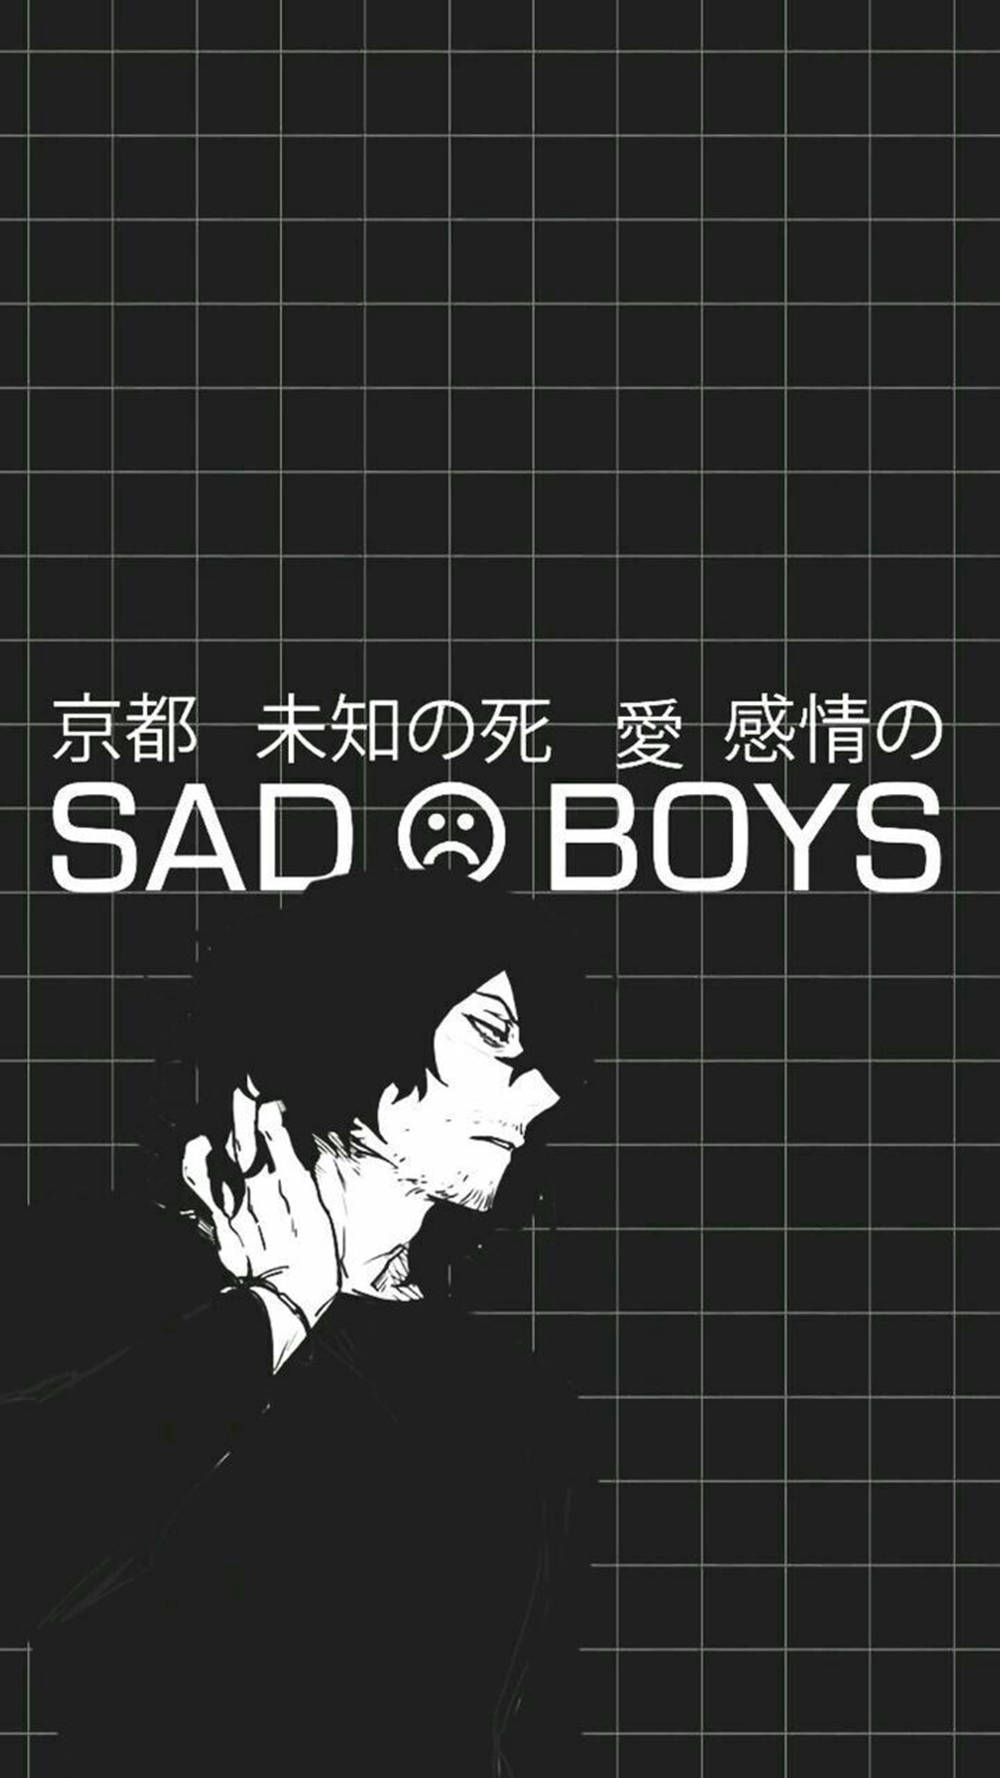 Boys With Sad Aesthetic Tumblr Dark Background